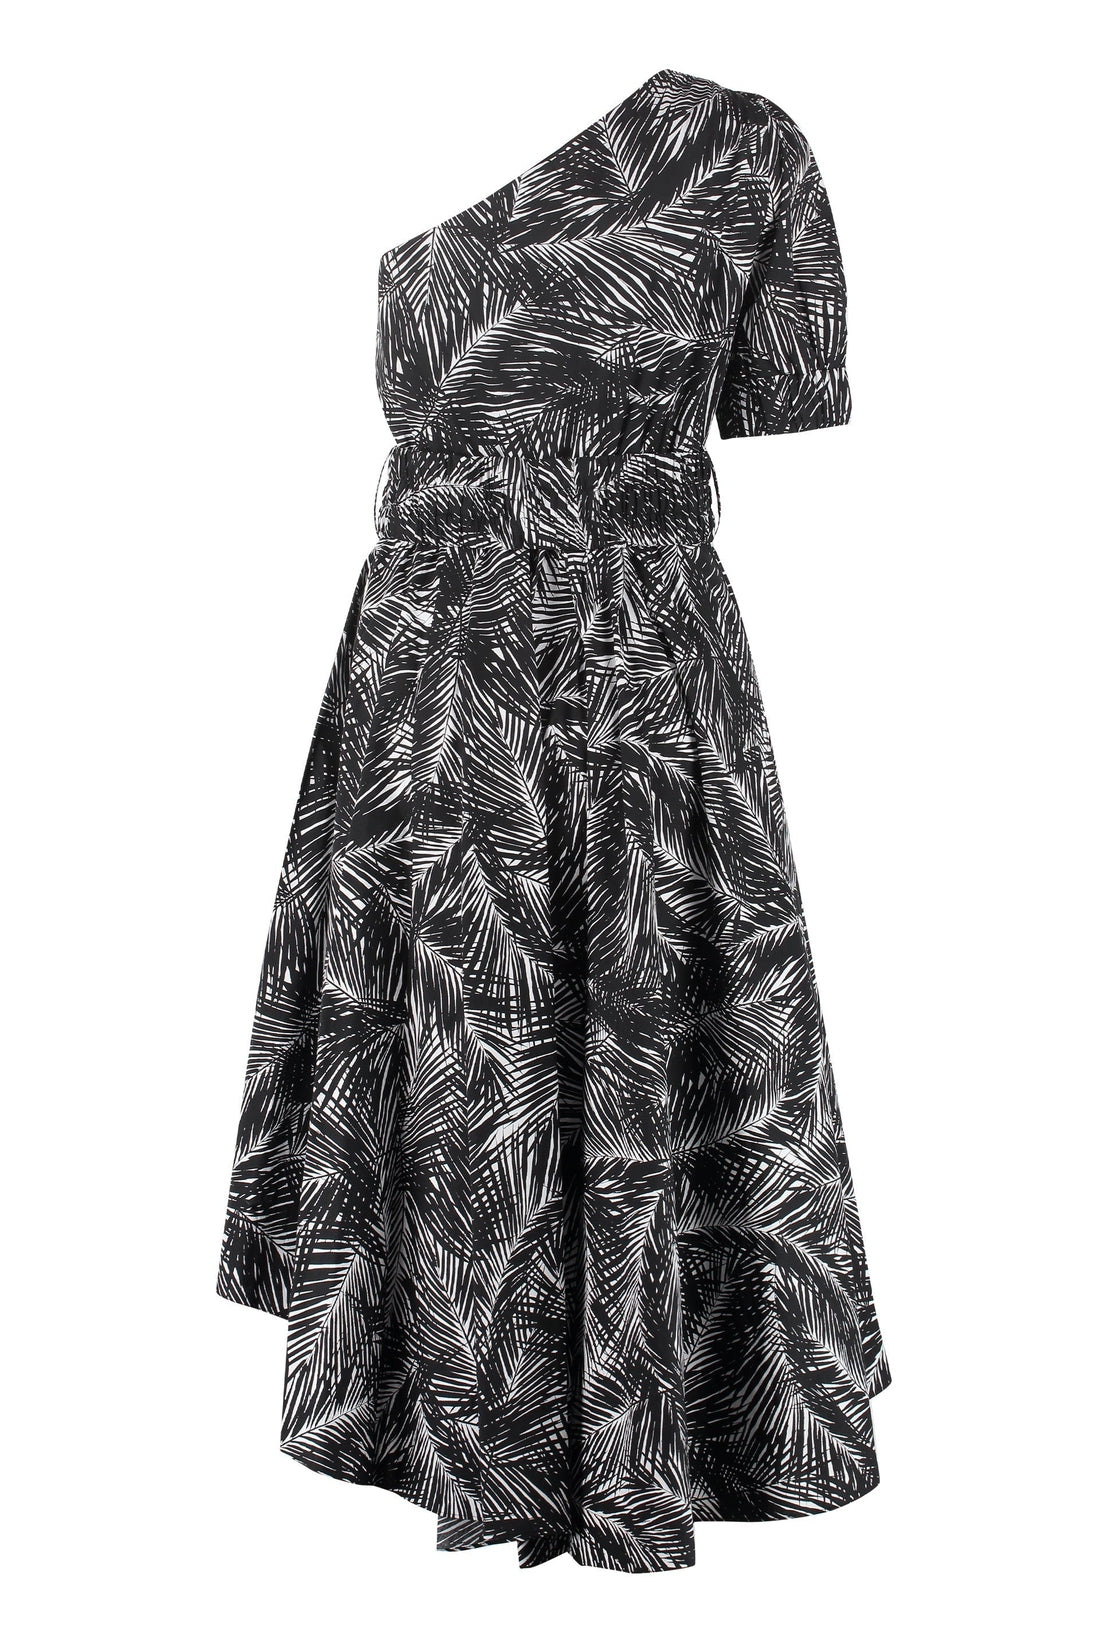 MICHAEL MICHAEL KORS-OUTLET-SALE-Printed one-shoulder dress-ARCHIVIST